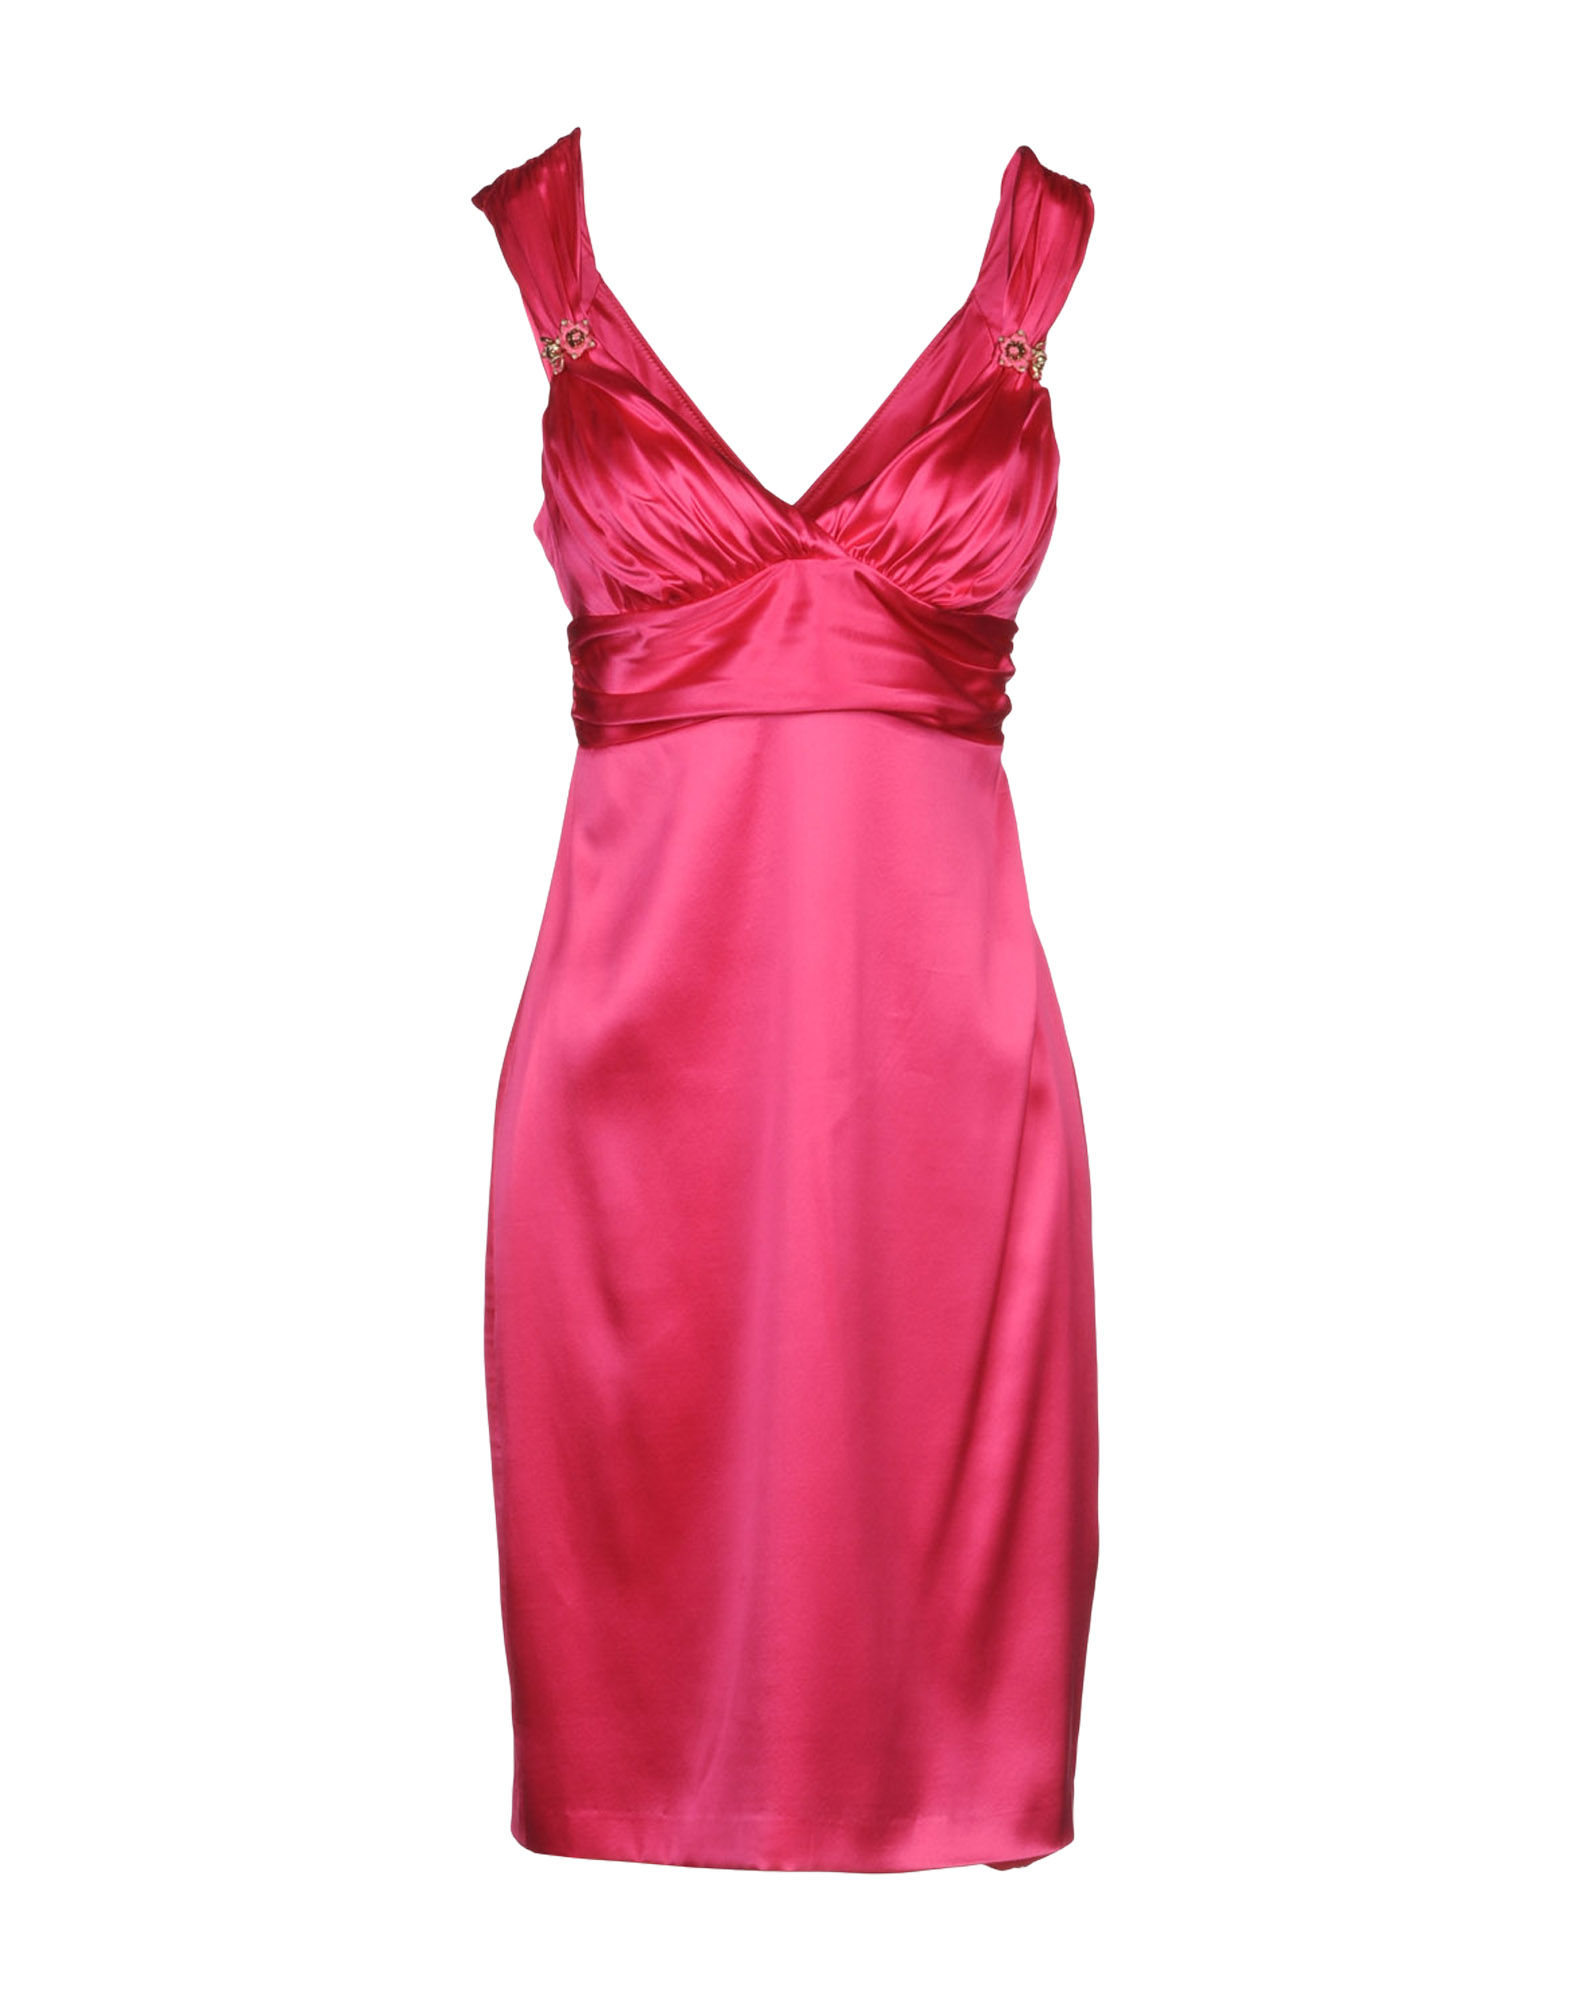 Roberto Cavalli Satin Short Dress in Pink - Lyst